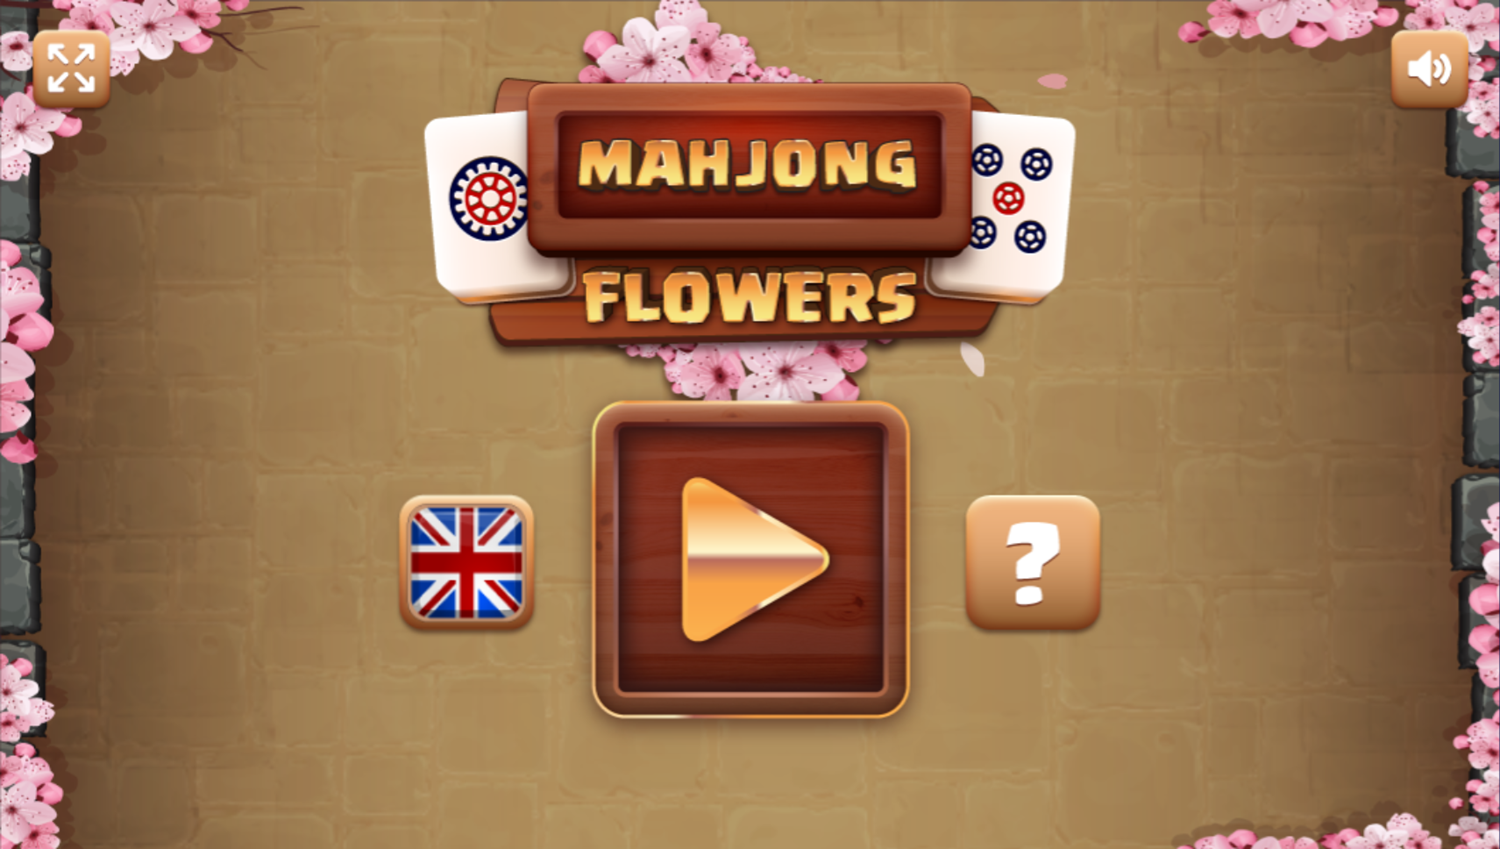 Mahjong Flowers Game Welcome Screen Screenshot.